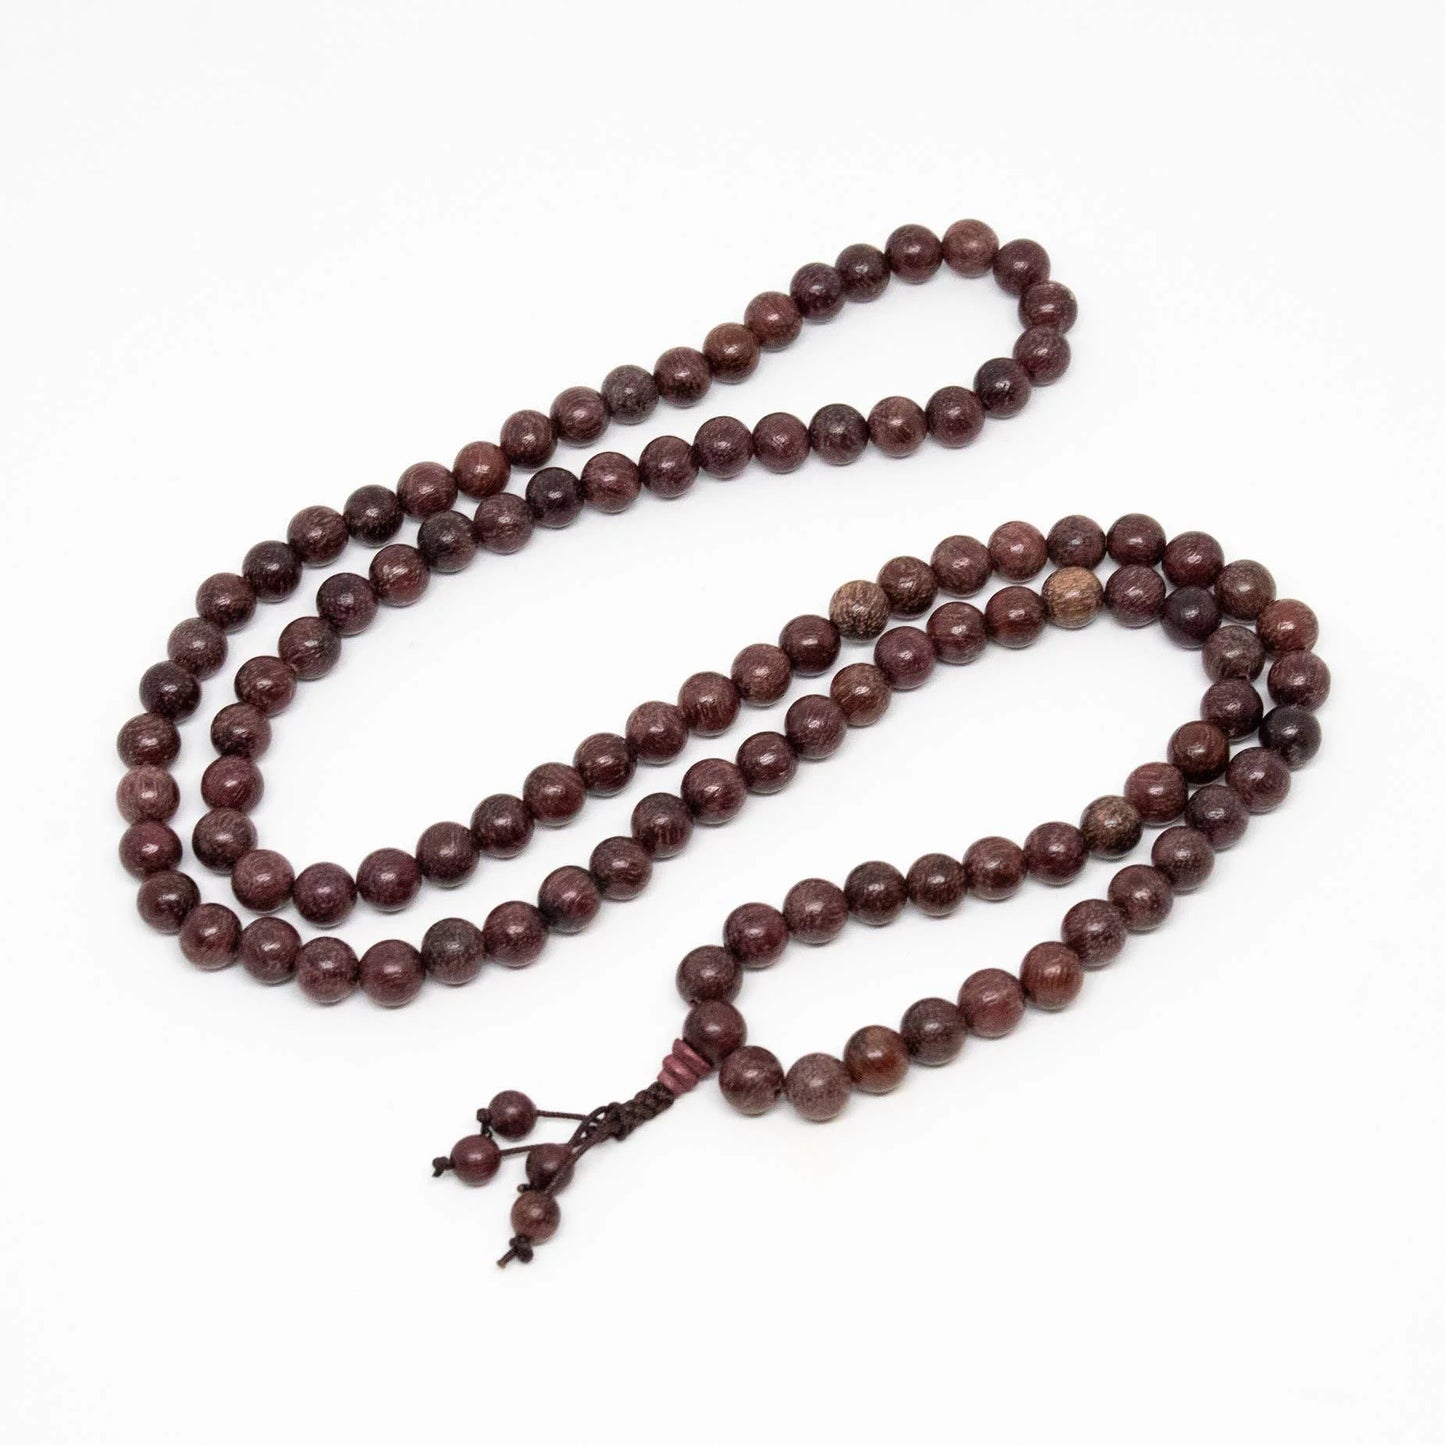 Purpleheart Wood Zen 108 Bead Mala Prayer Beads - 8mm (1 Pack)